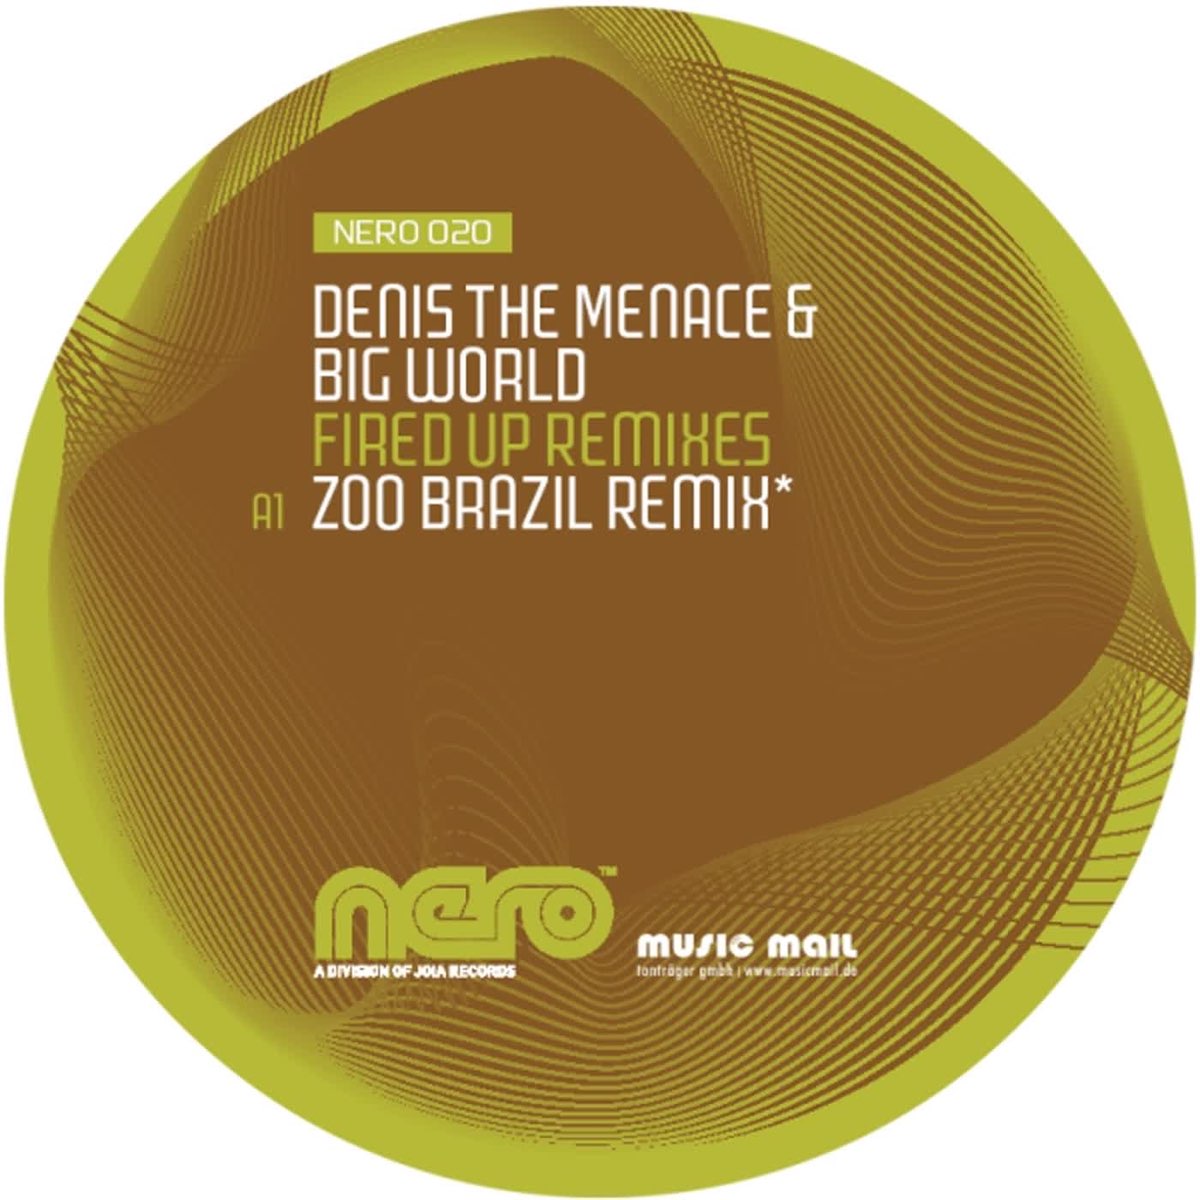 Show me a reason denis the menace. Big World & Denis the Menace. Fired up ремикс. Big World & Denis the Menace show. Big World & Denis the Menace show me a reason.